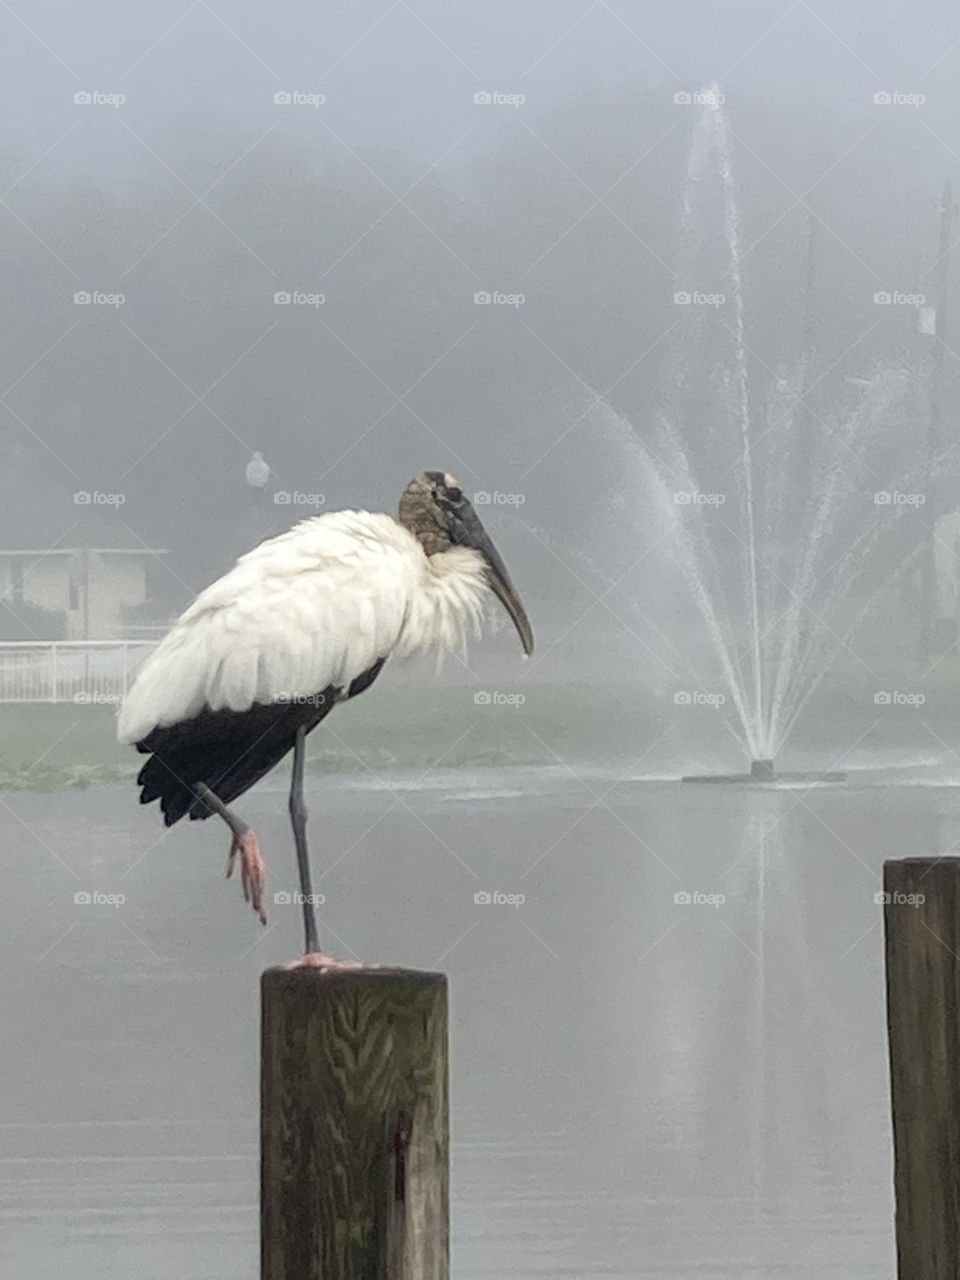 Big bird on a pier at a lake